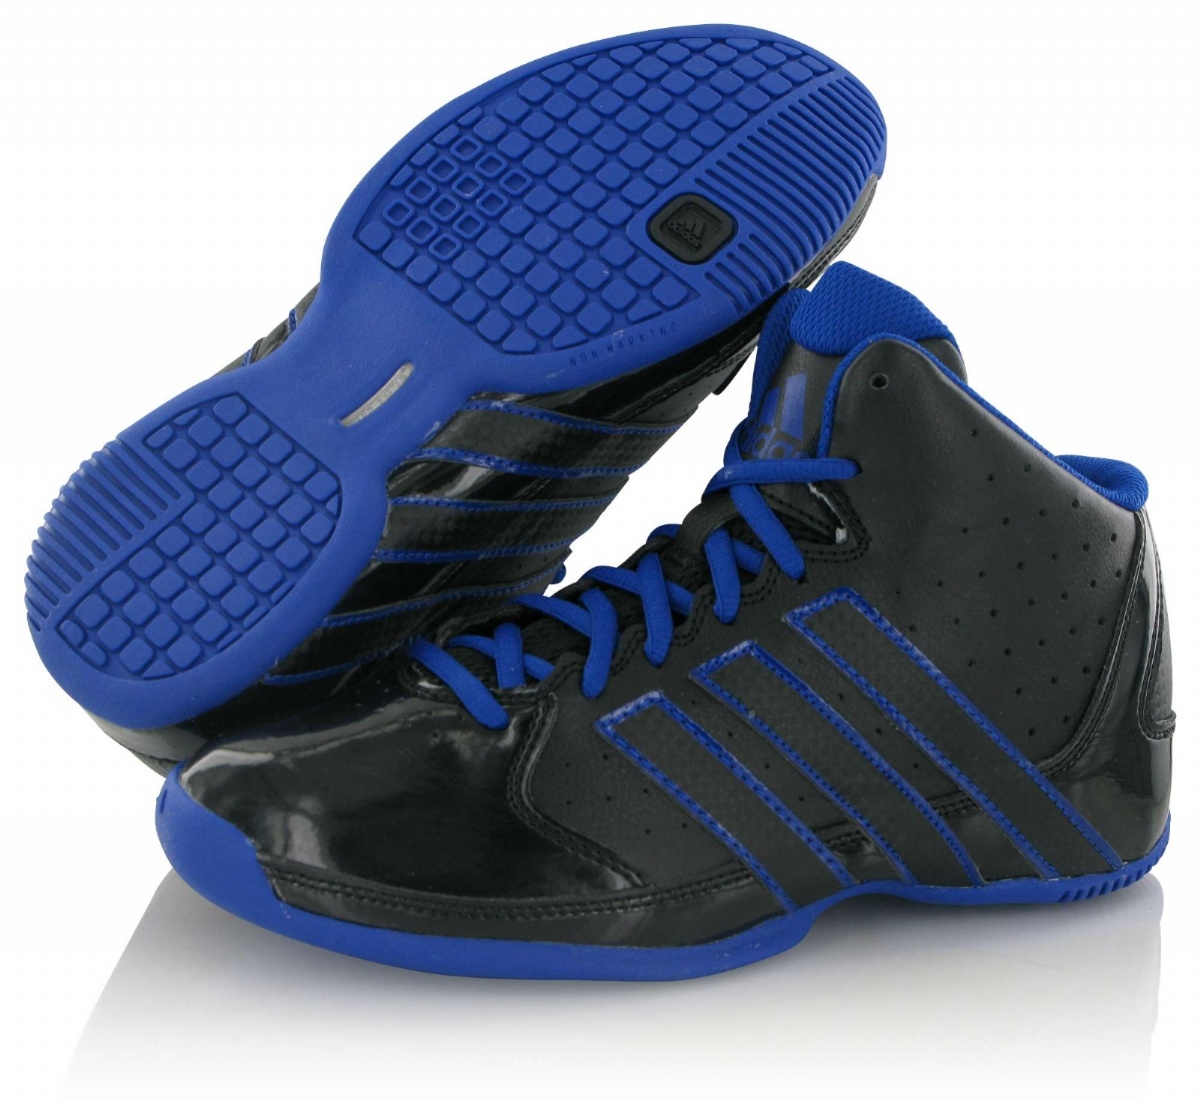 Adidas Rise Up 2 NBA K Niñ@ (negro/azul) - manelsanchez.com